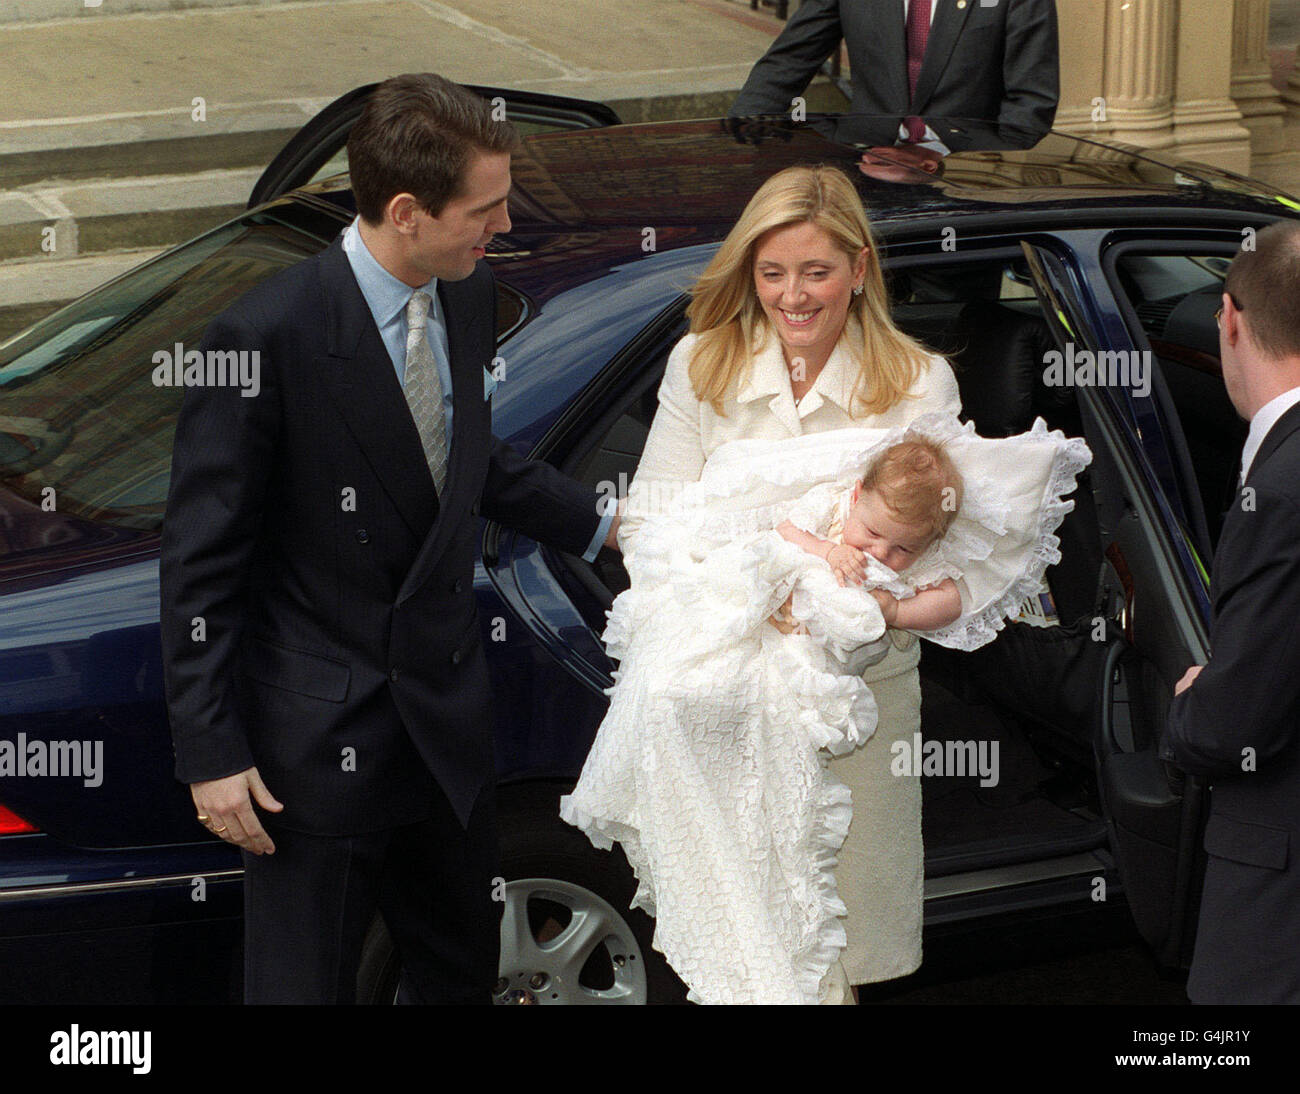 Il principe greco, princess & baby Foto stock - Alamy